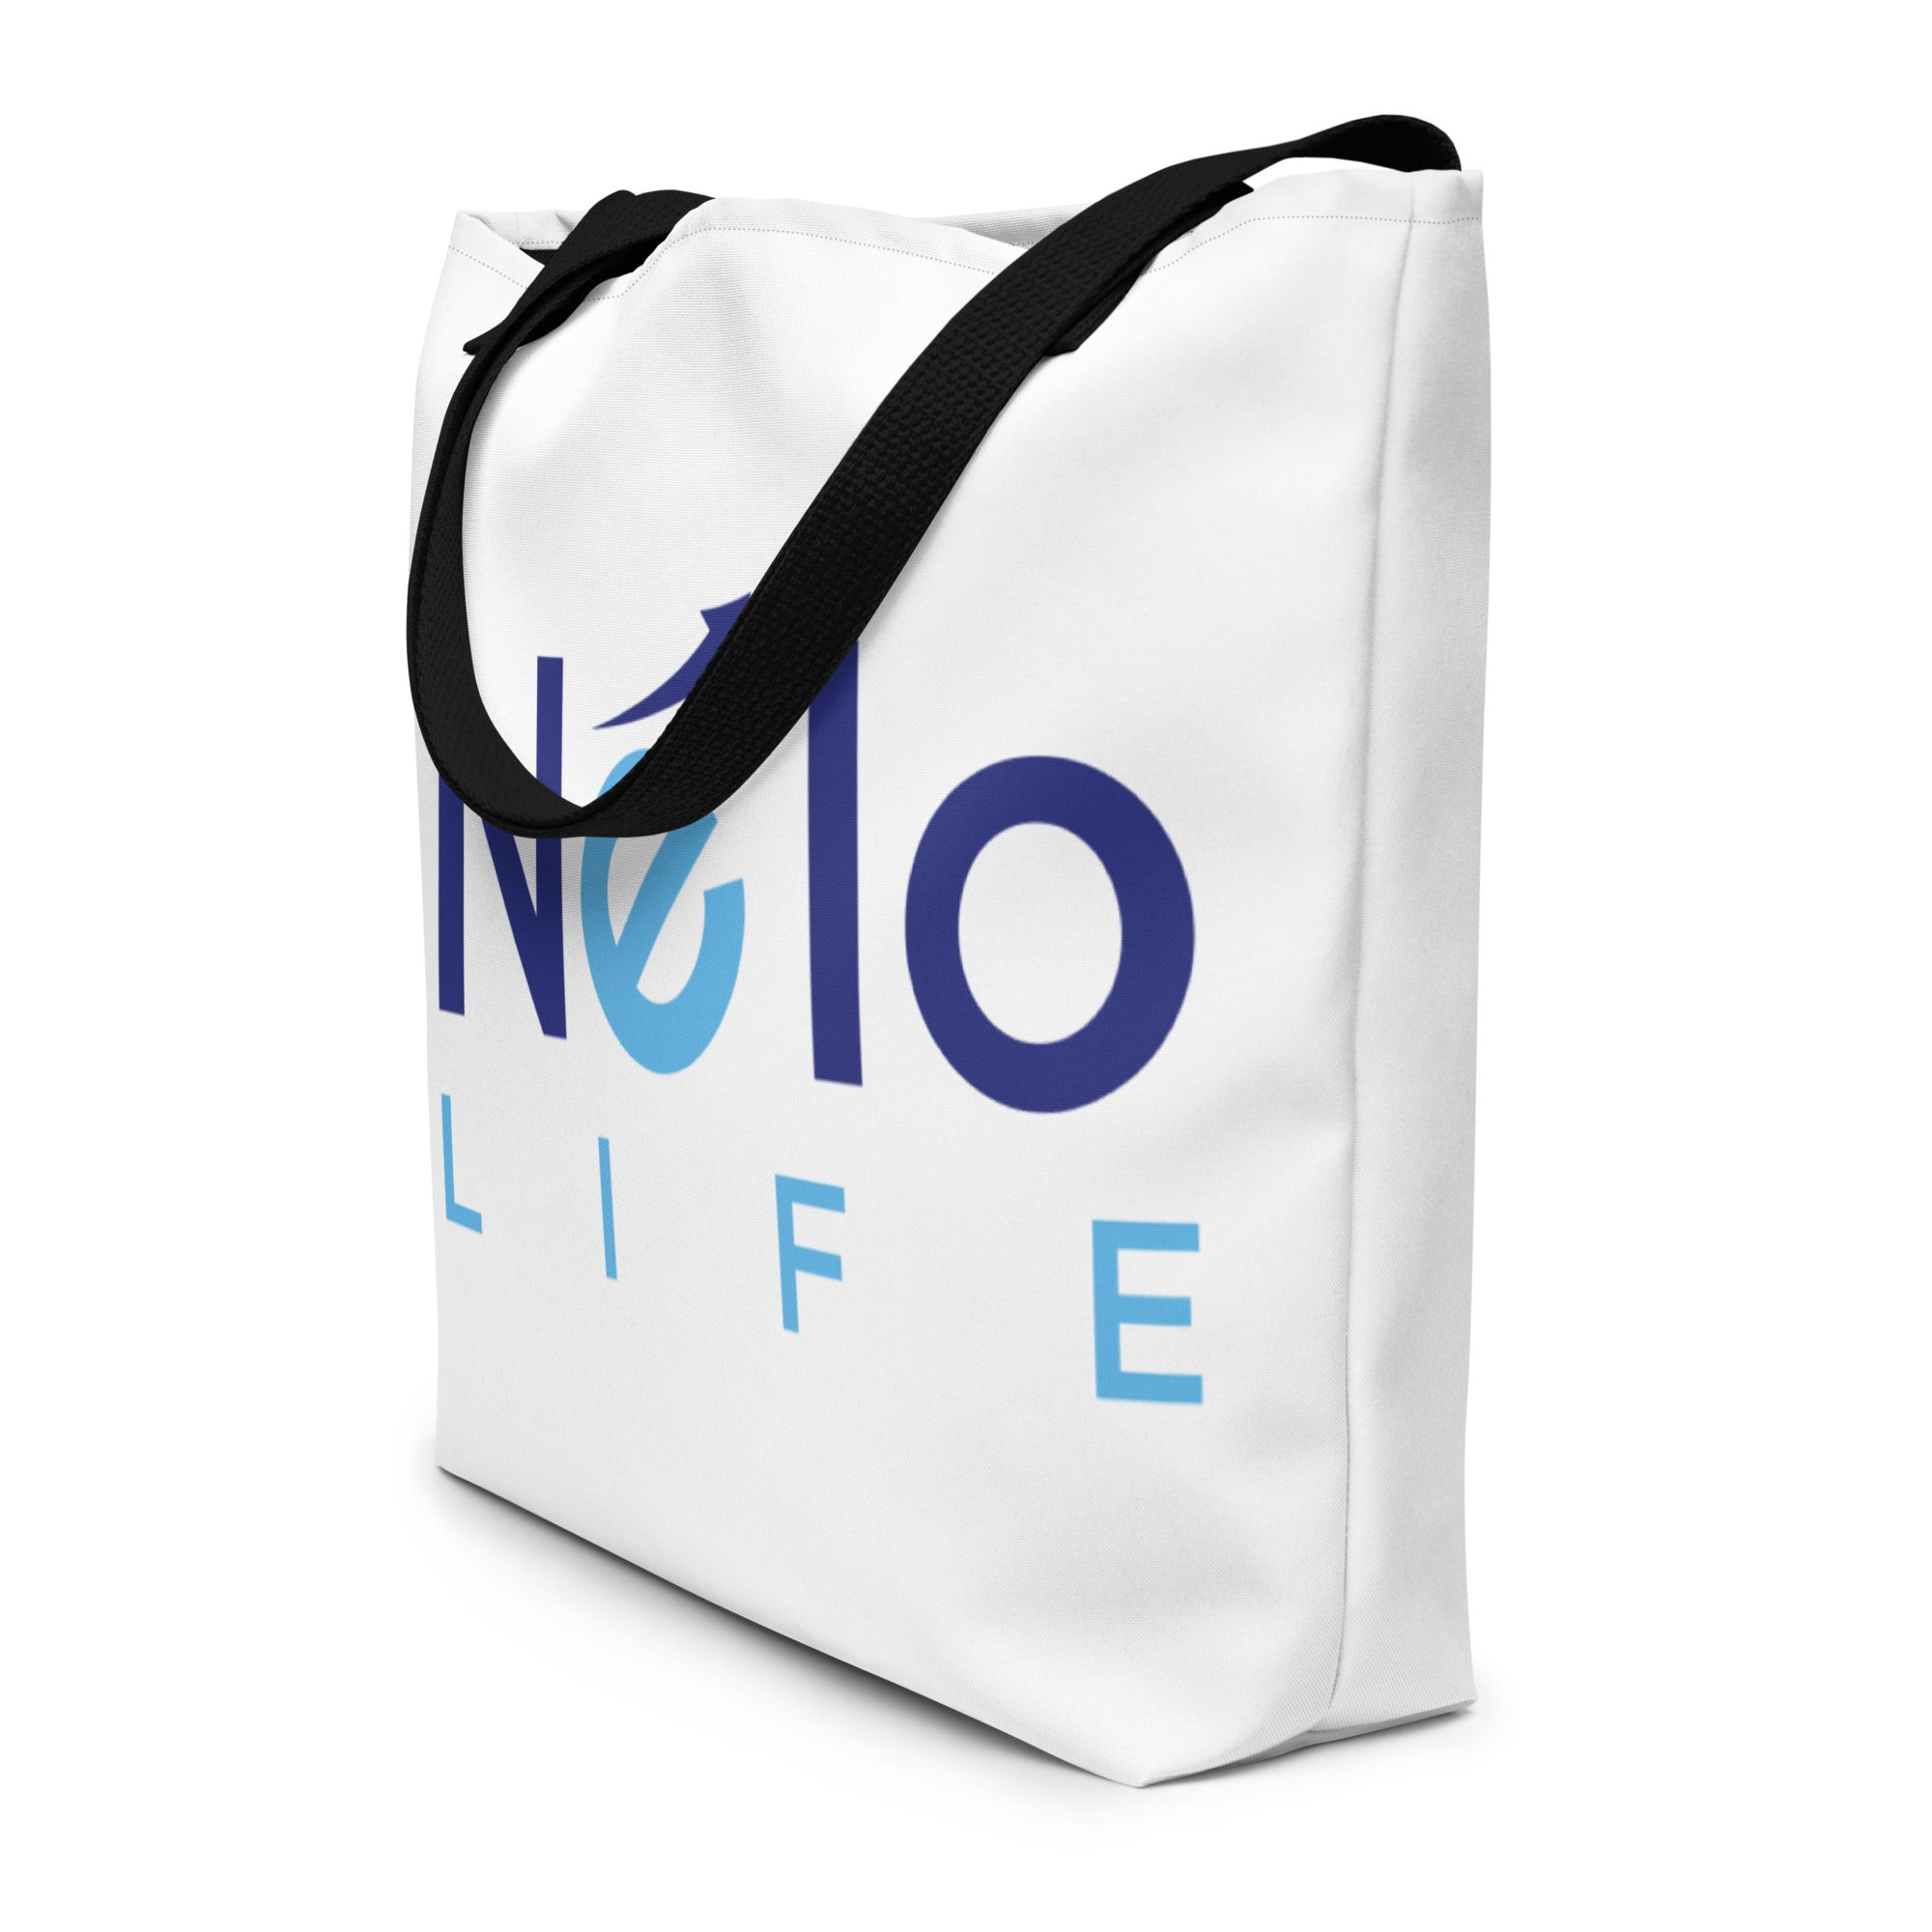 NELO LIFE Large Tote Bag